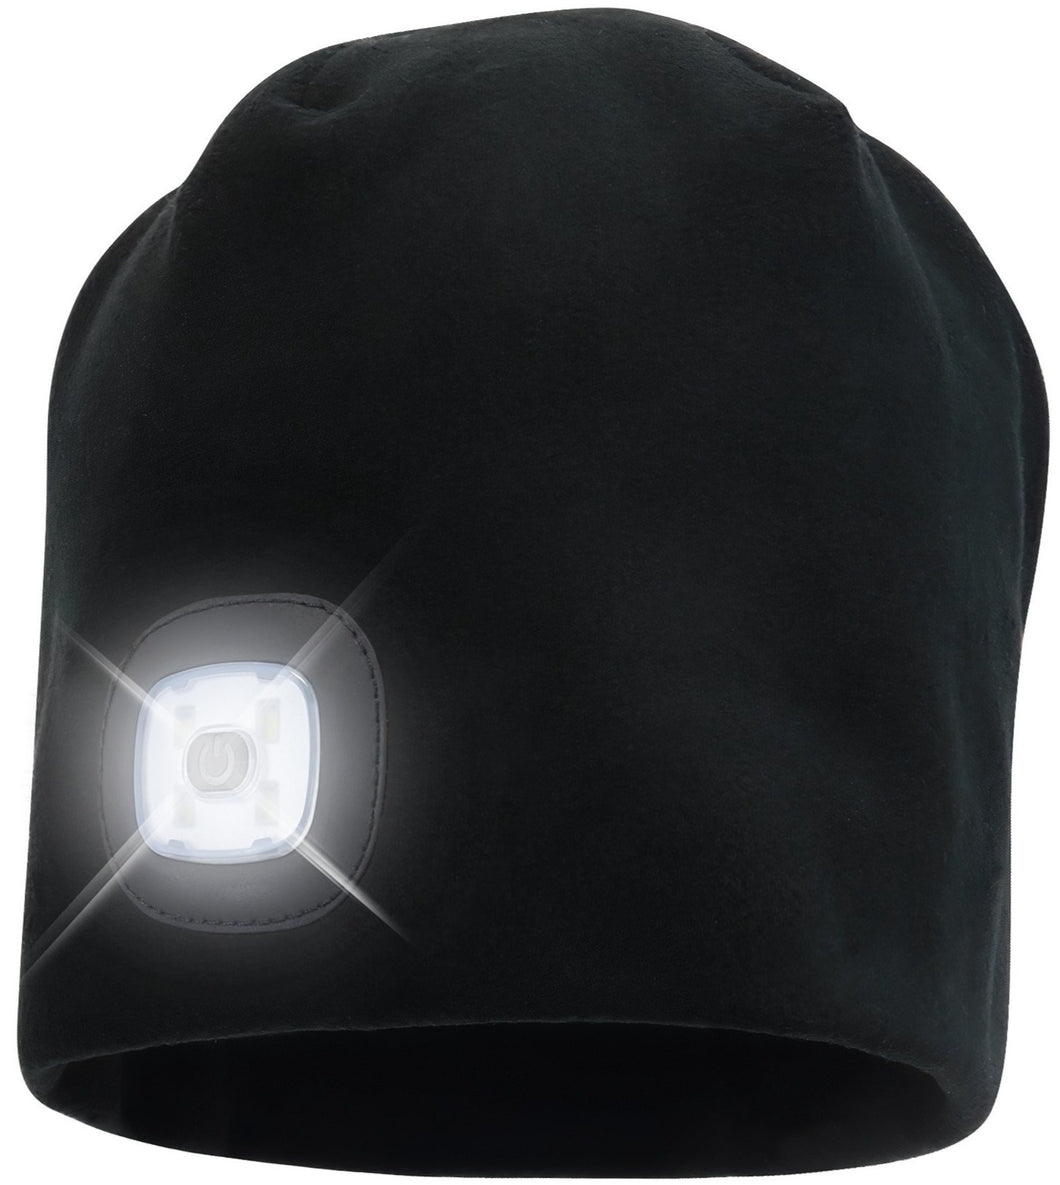 Headlightz® Beanie - Fleece - Black